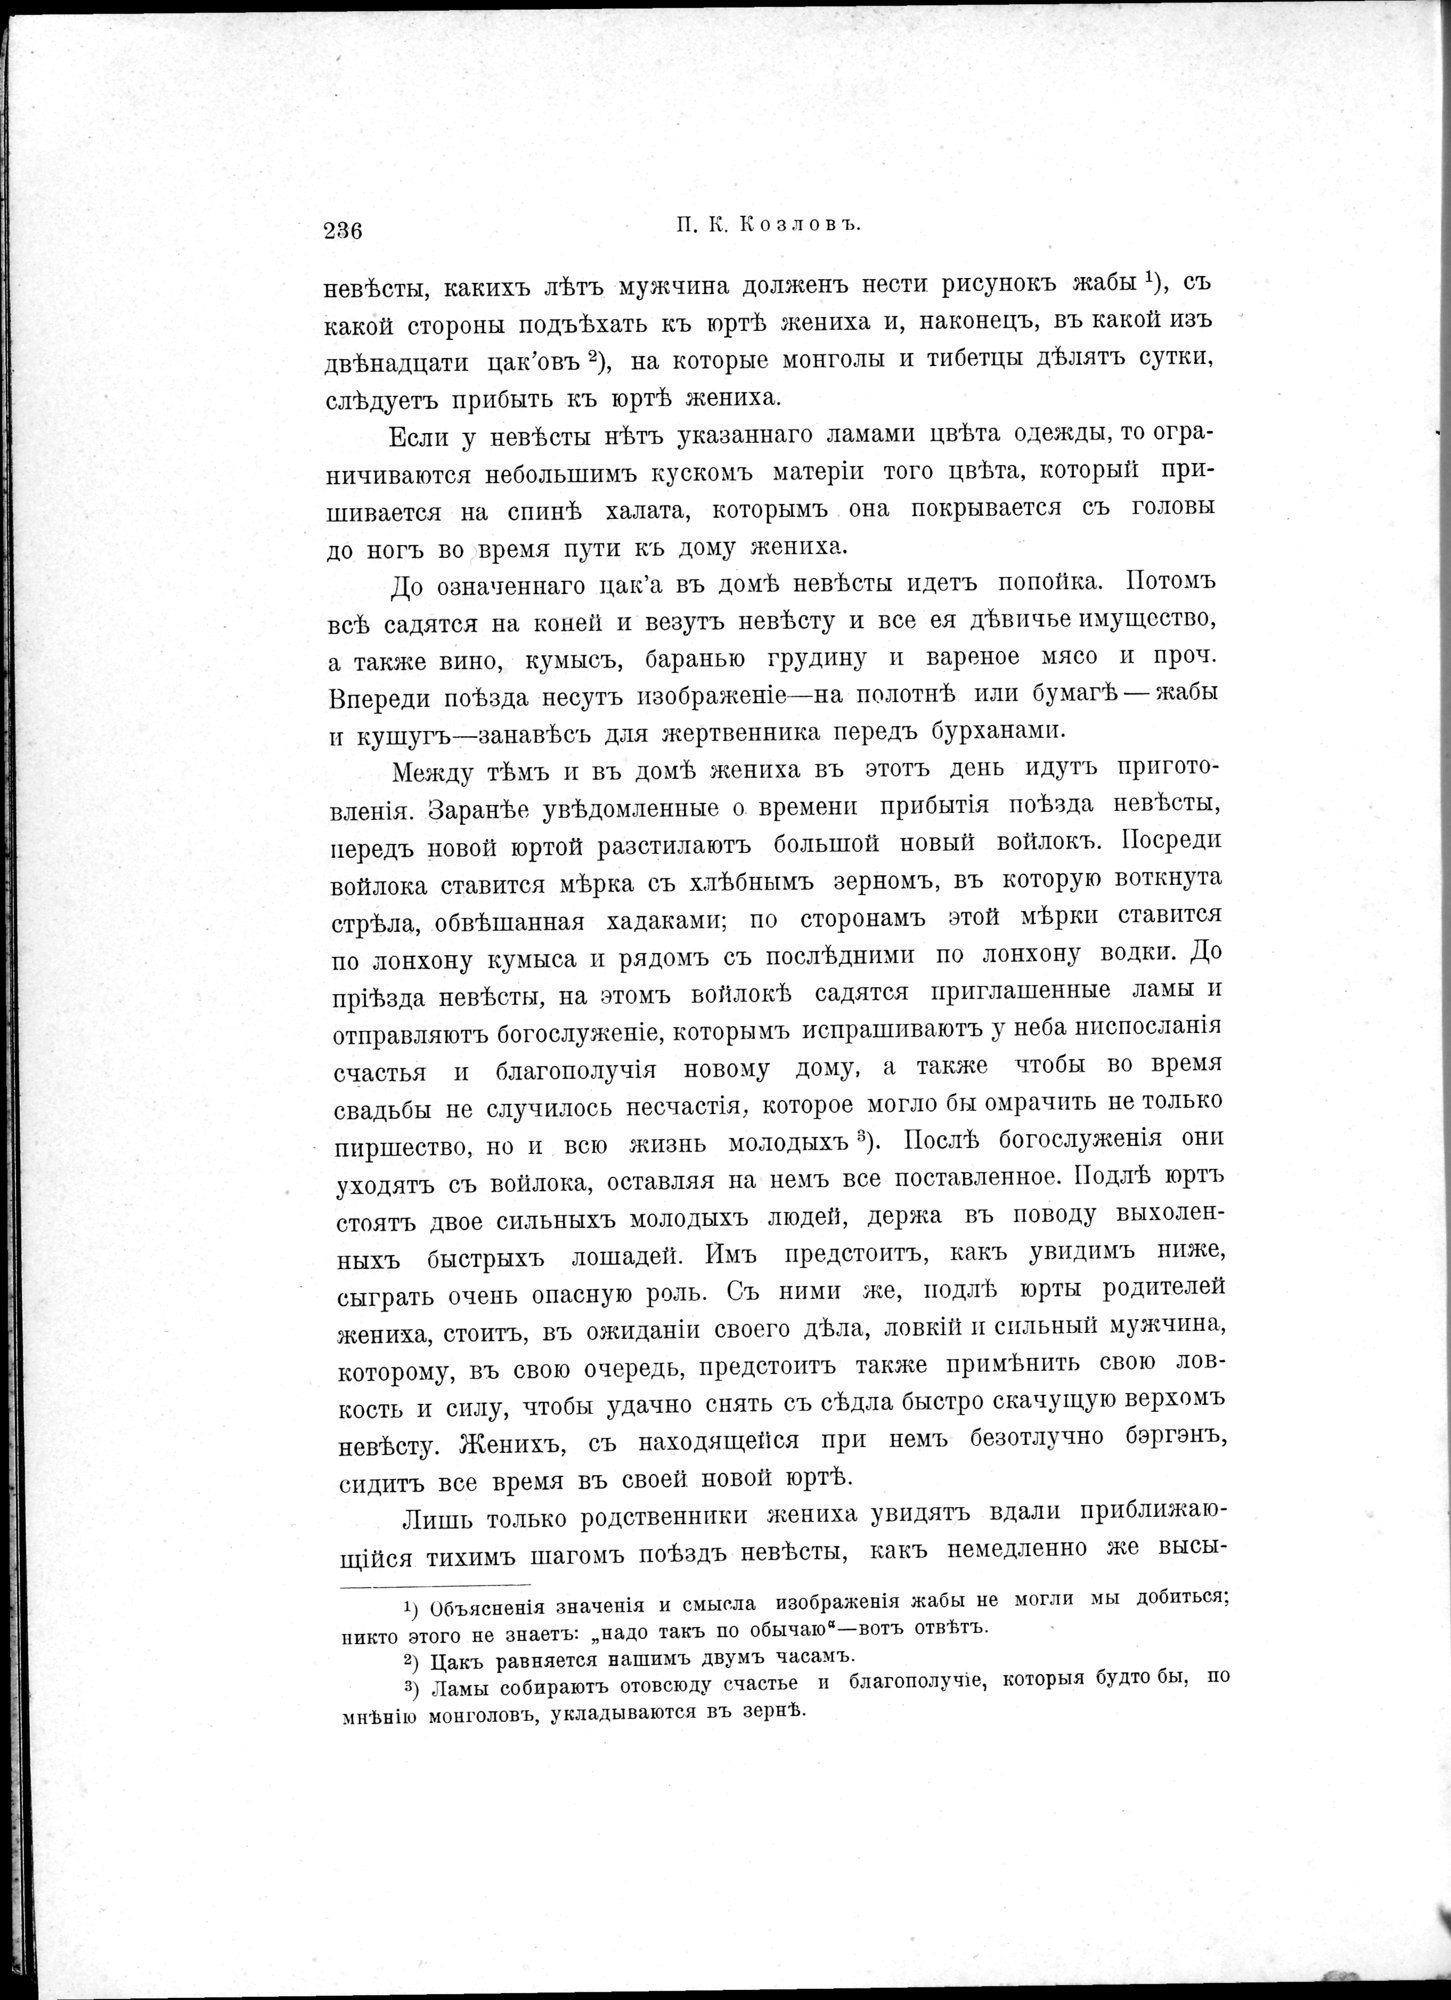 Mongoliia i Kam : vol.1 / Page 288 (Grayscale High Resolution Image)